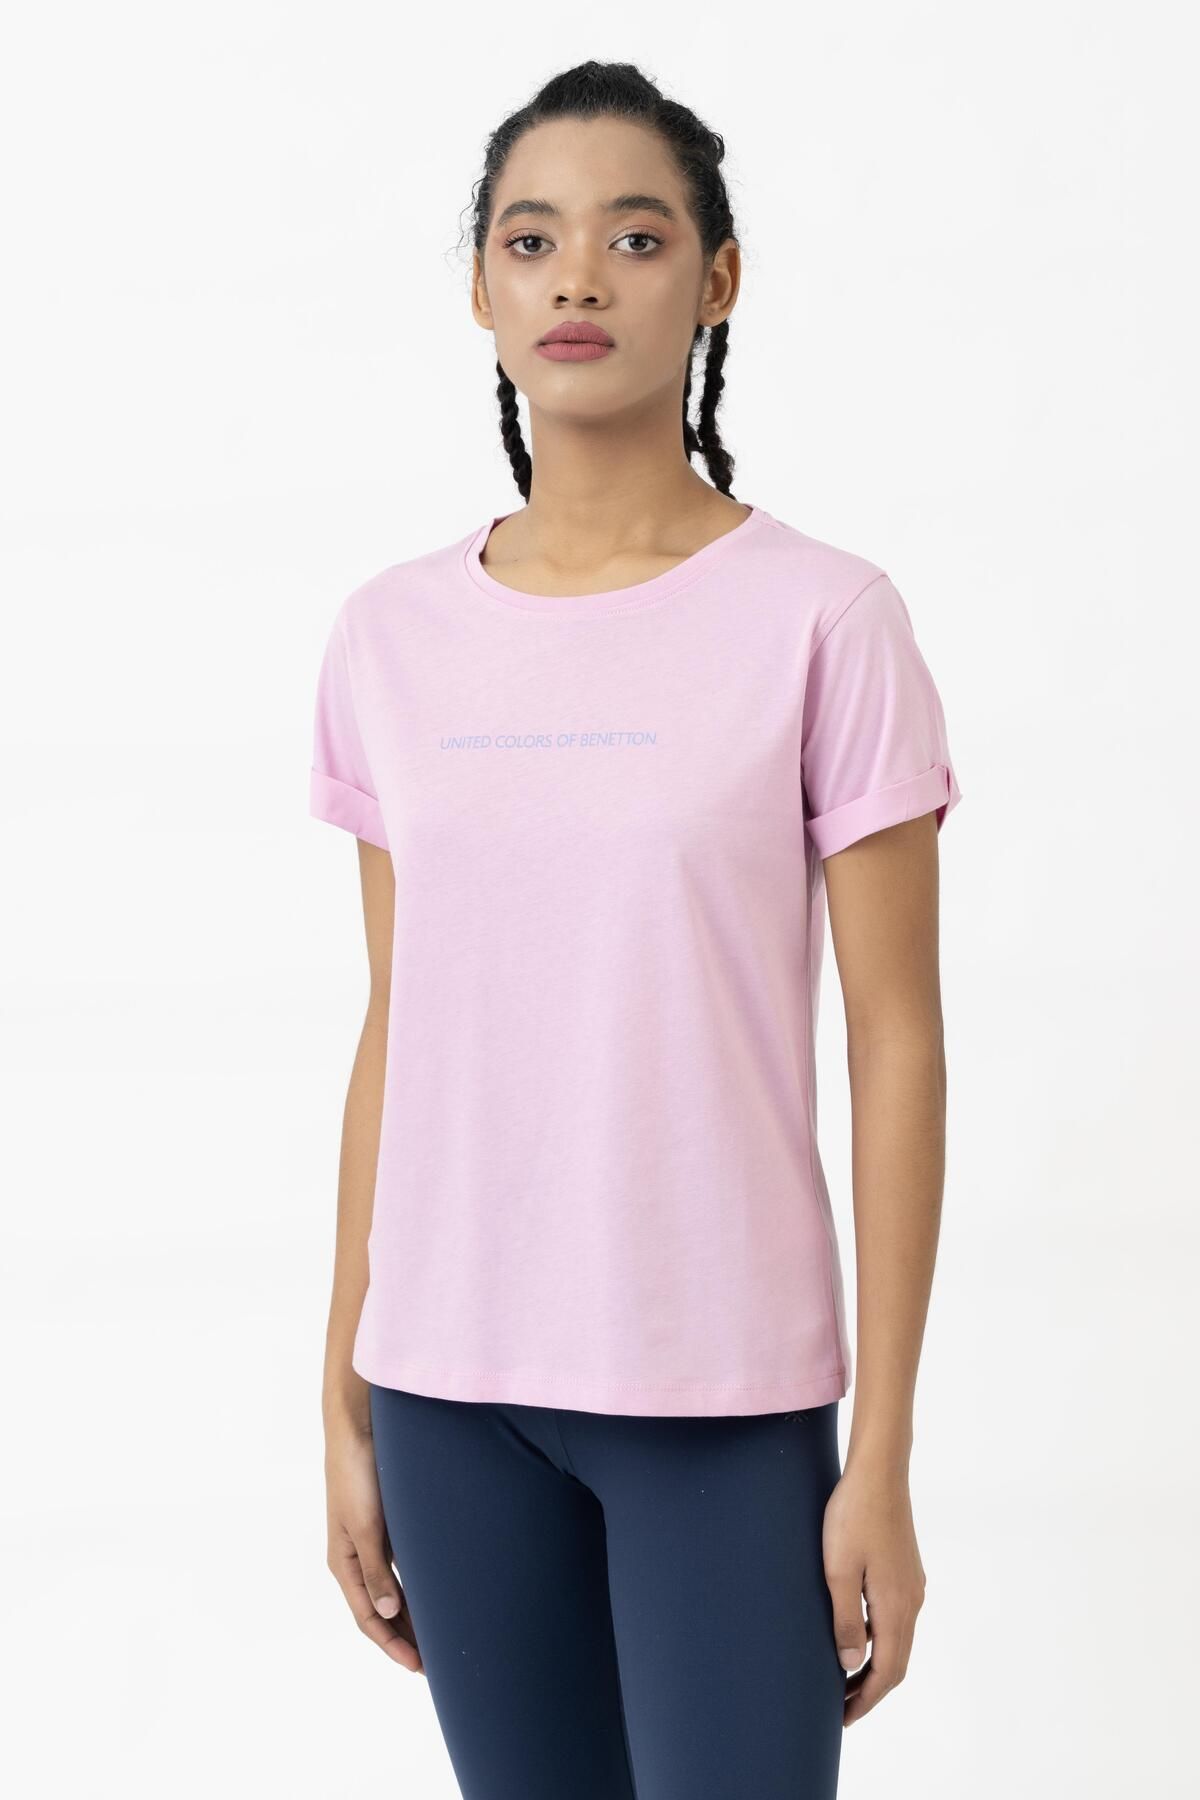 United Colors of Benetton Kadın Tshirt Bnt-w21012